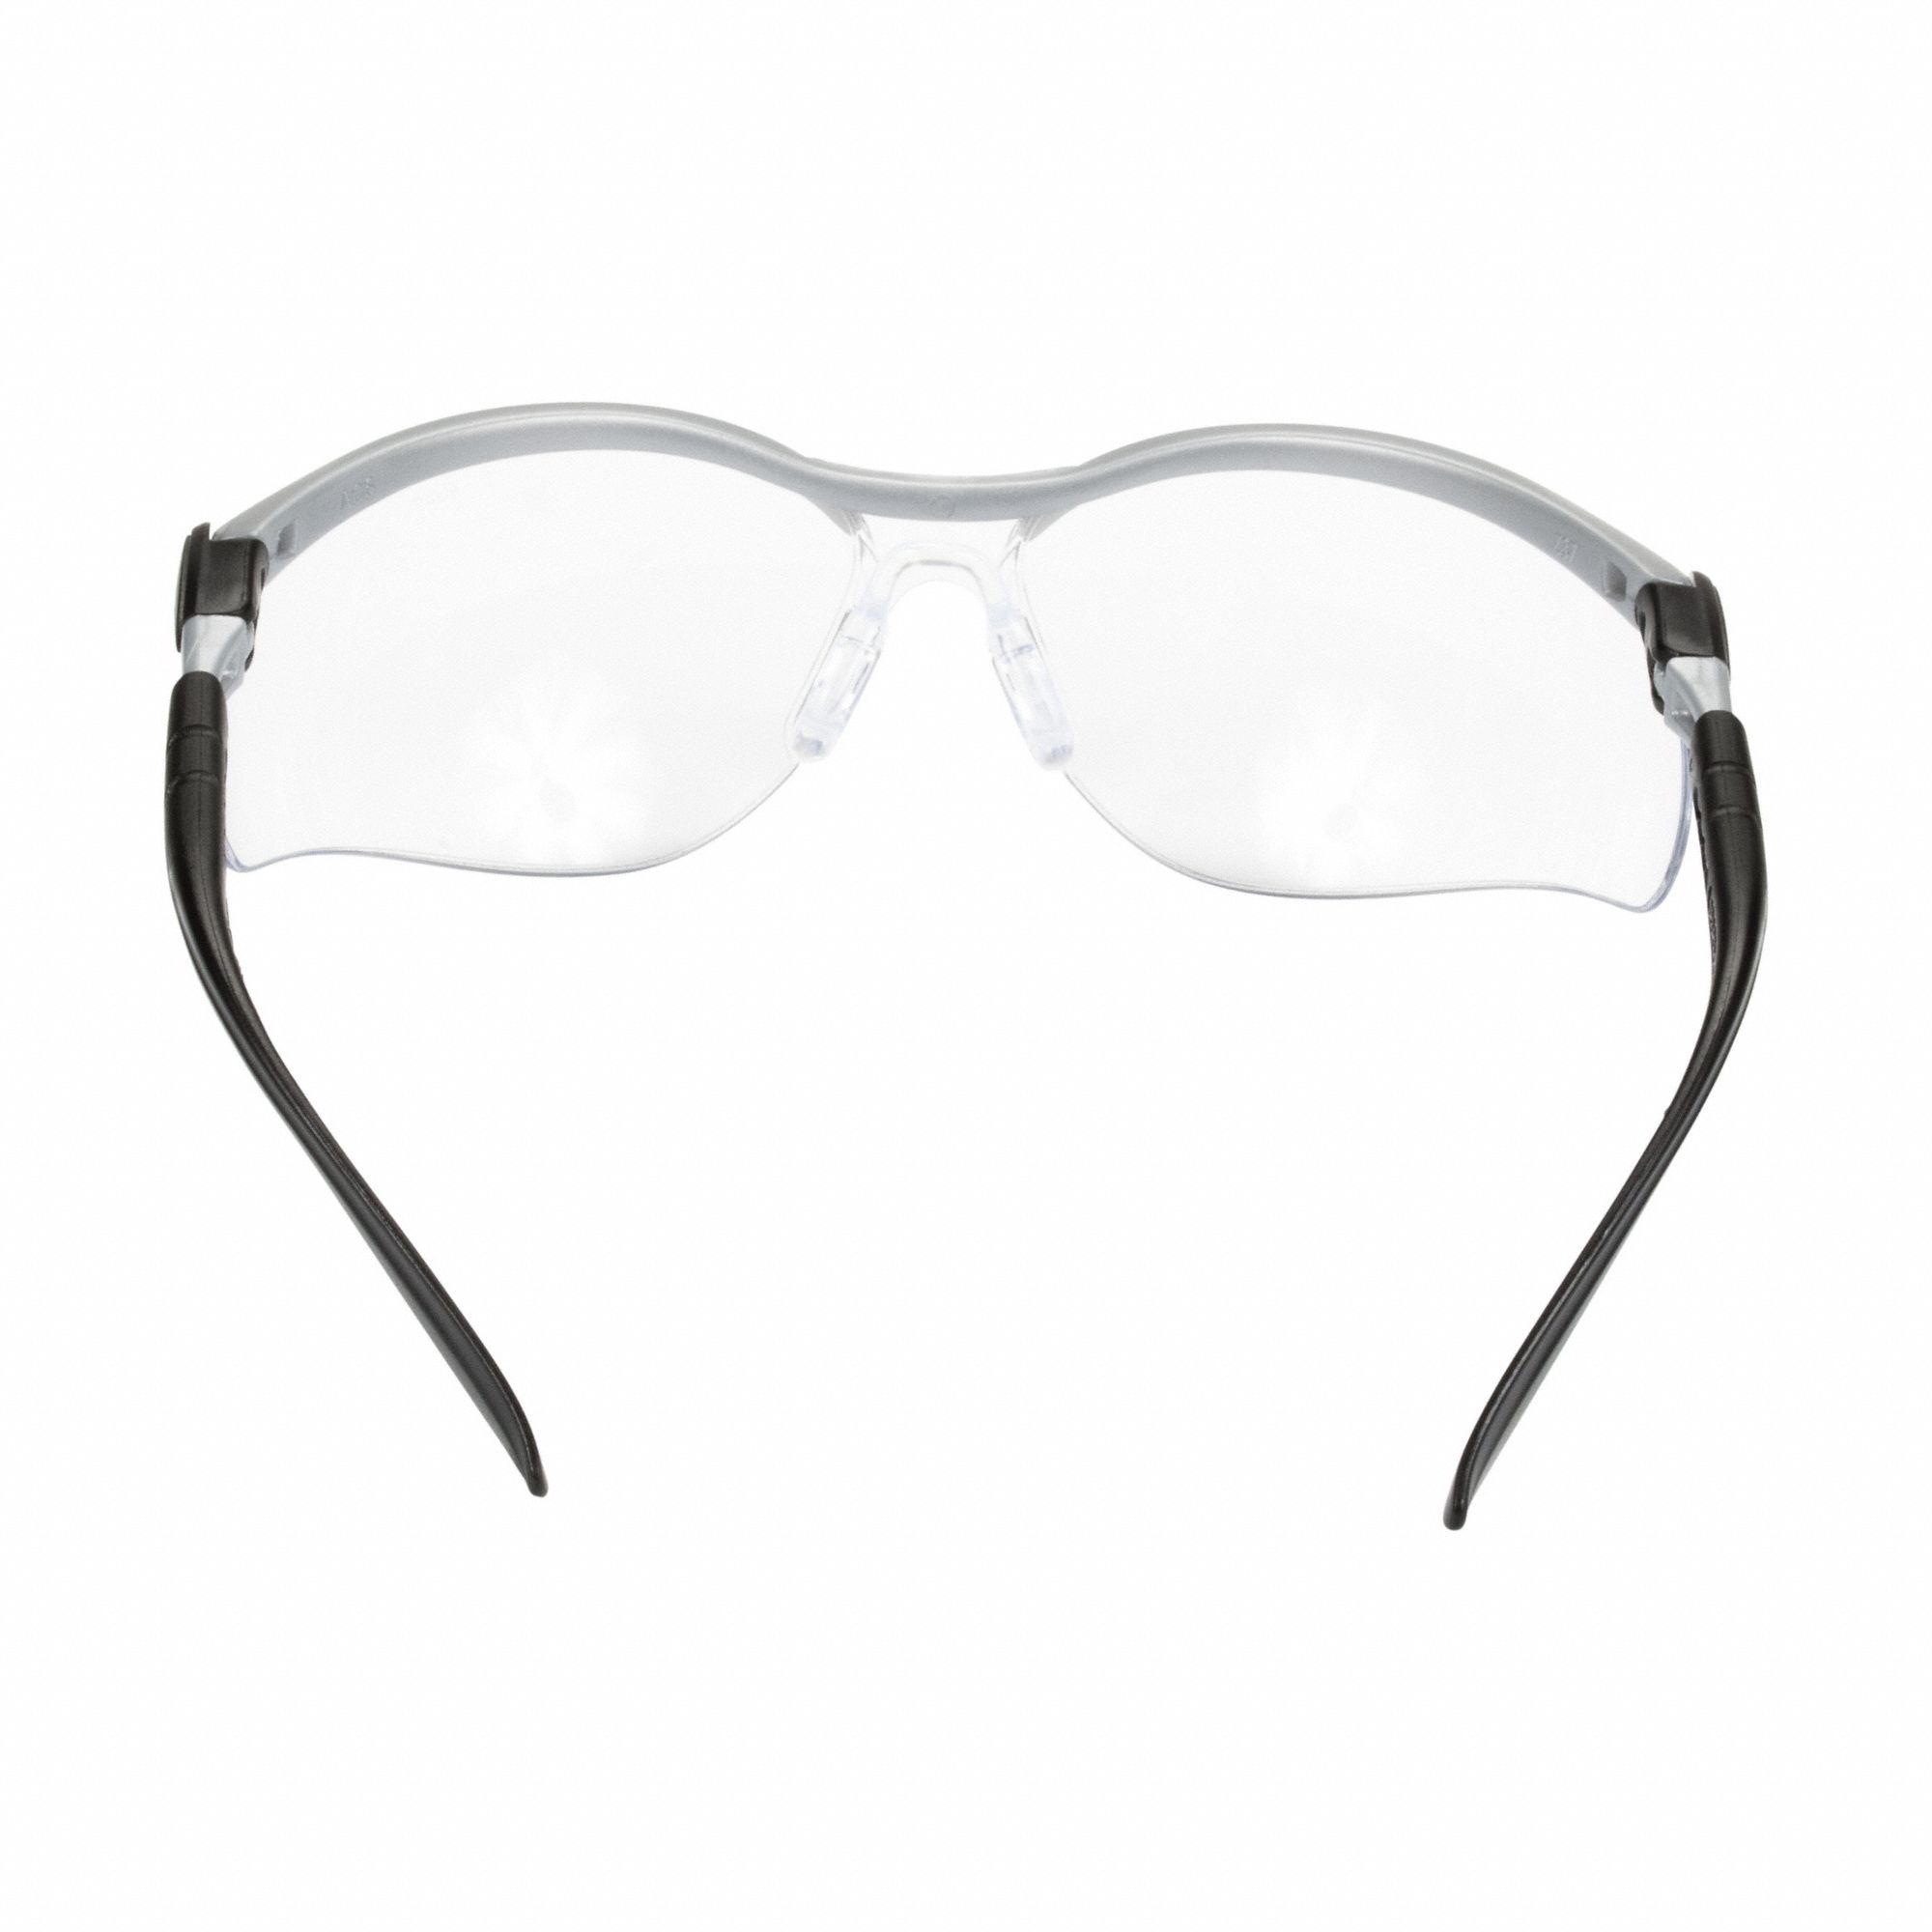 3M 113800000020 Adjustable BX Protective Eyewear for sale online